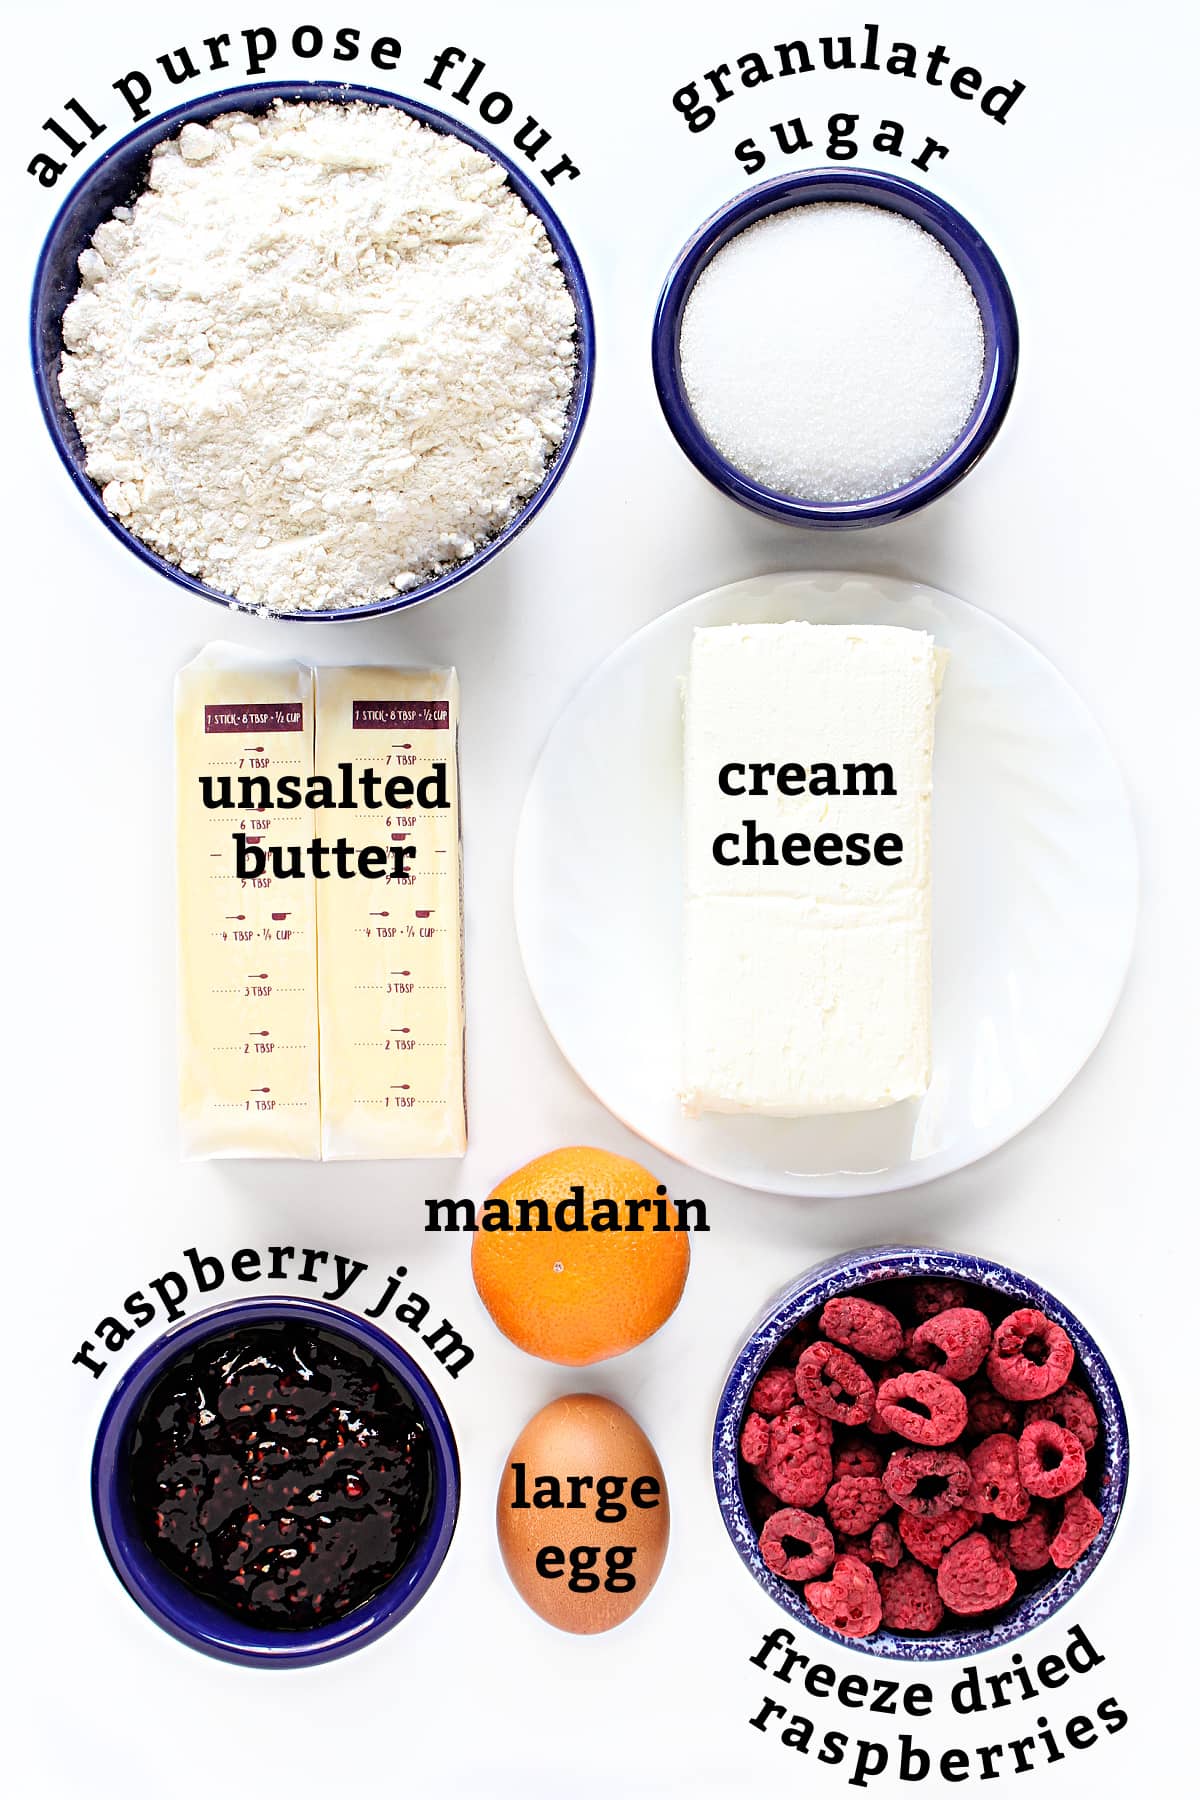 Ingredients labeled: all-purpose flour, sugar, butter, cream cheese, raspberry jam, mandarin, egg, freeze dried raspberries.